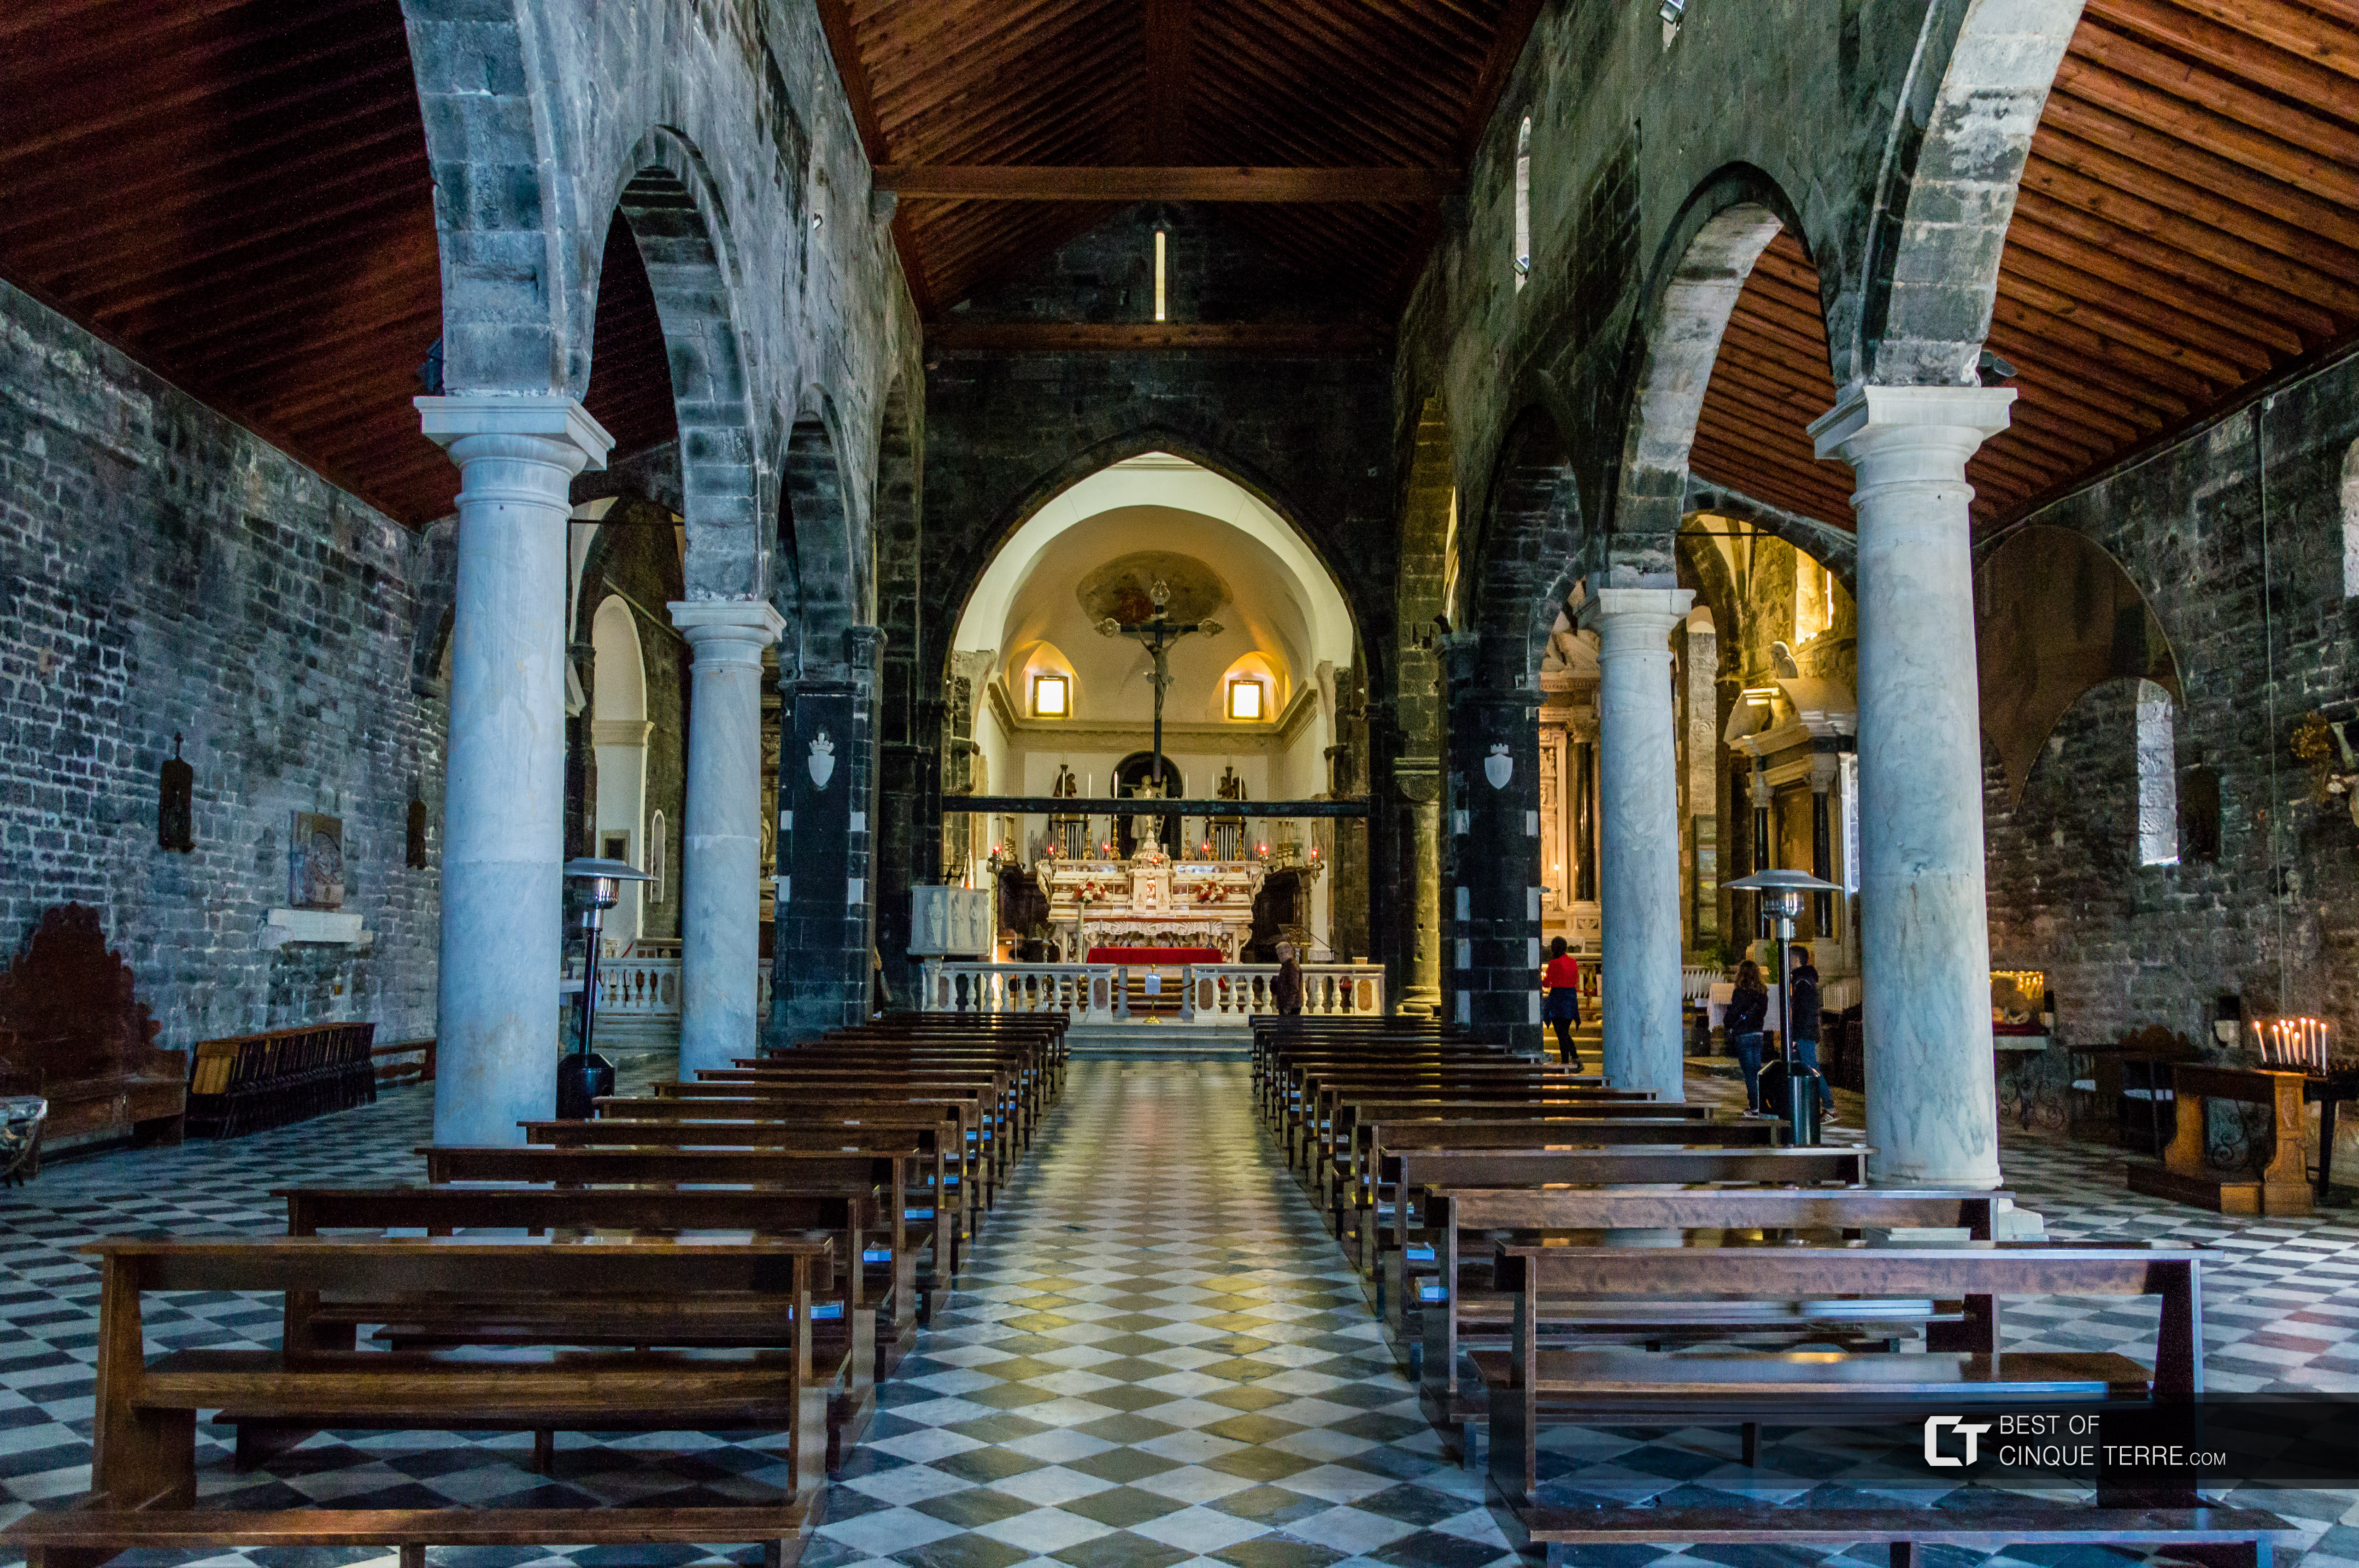 Interior da igreja de São Pedro, Portovenere, Itália